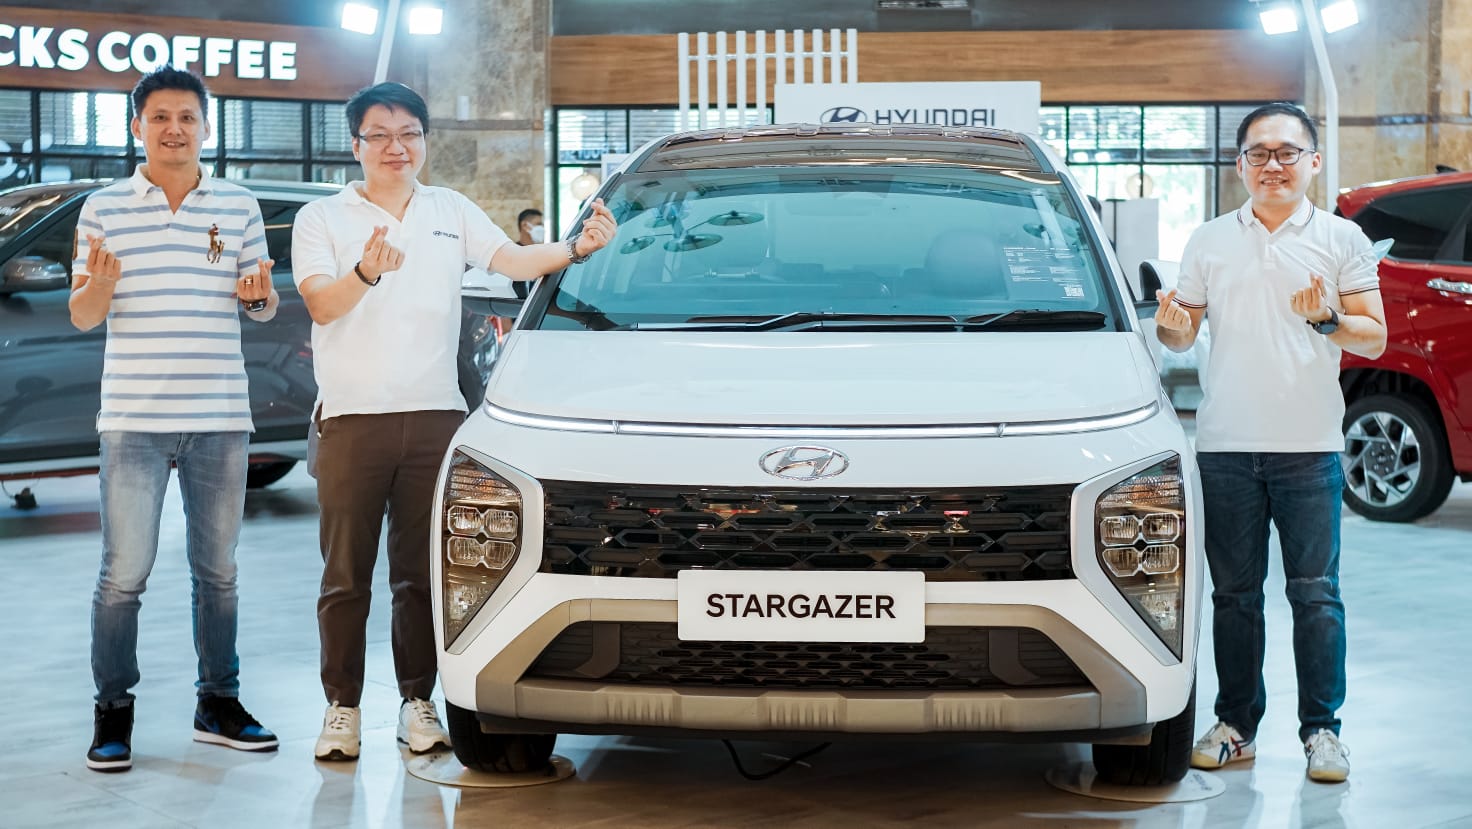 Buruan, Kunjungi Pameran Hyundai Stargazer di Mal SKA hingga Minggu